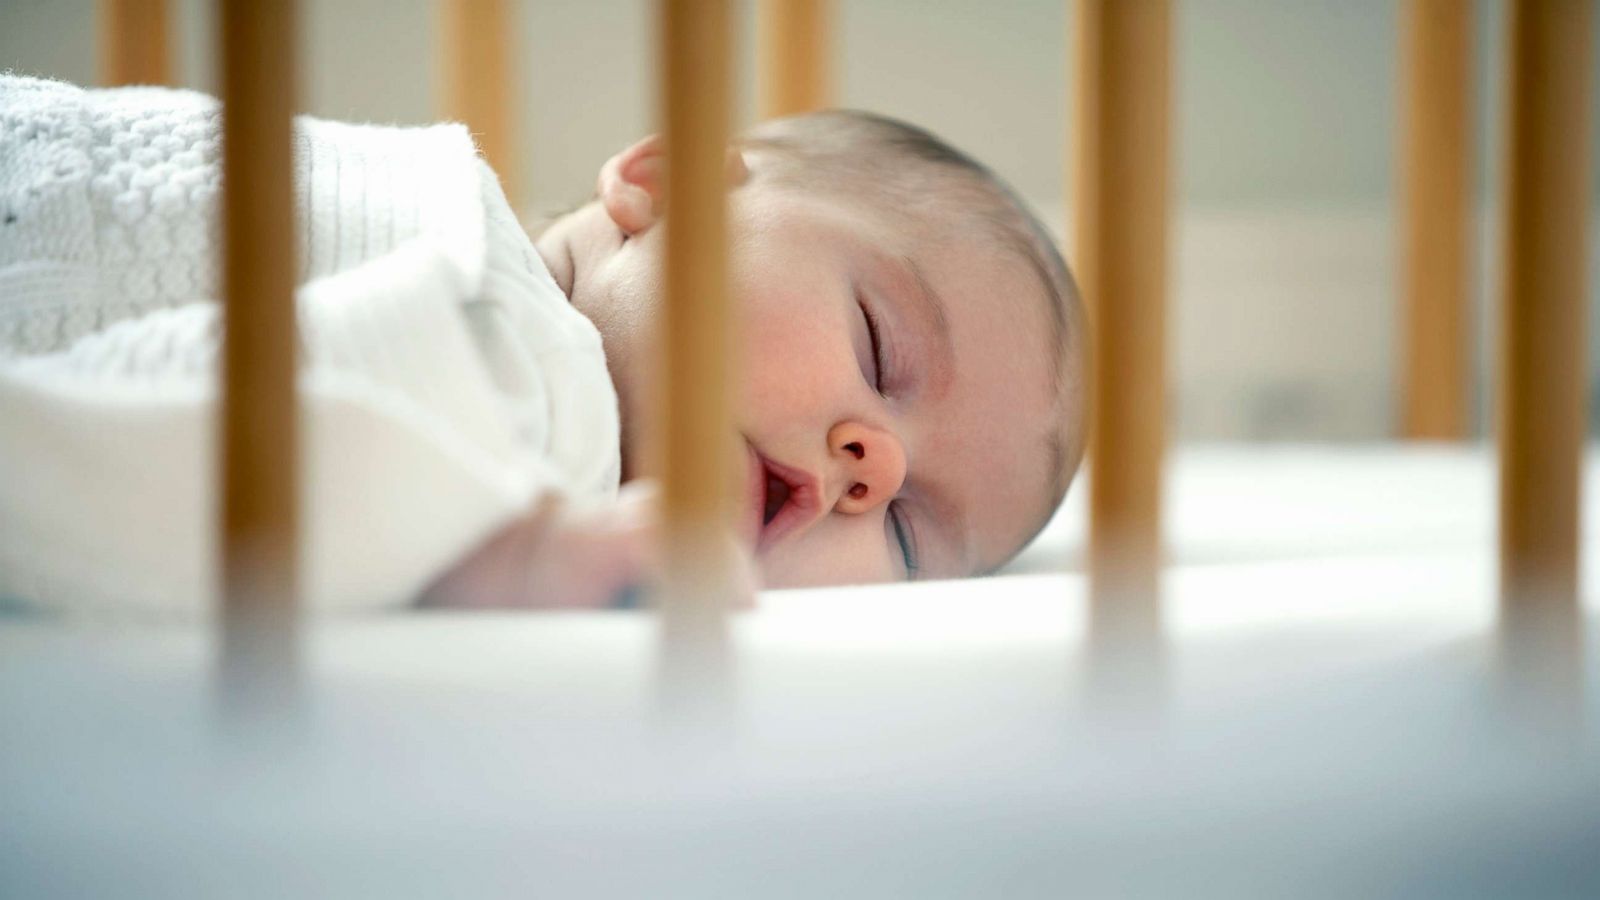 https://s.abcnews.com/images/Health/baby-sleeping-crib-rf-gty-jc-180822_hpMain_16x9_1600.jpg